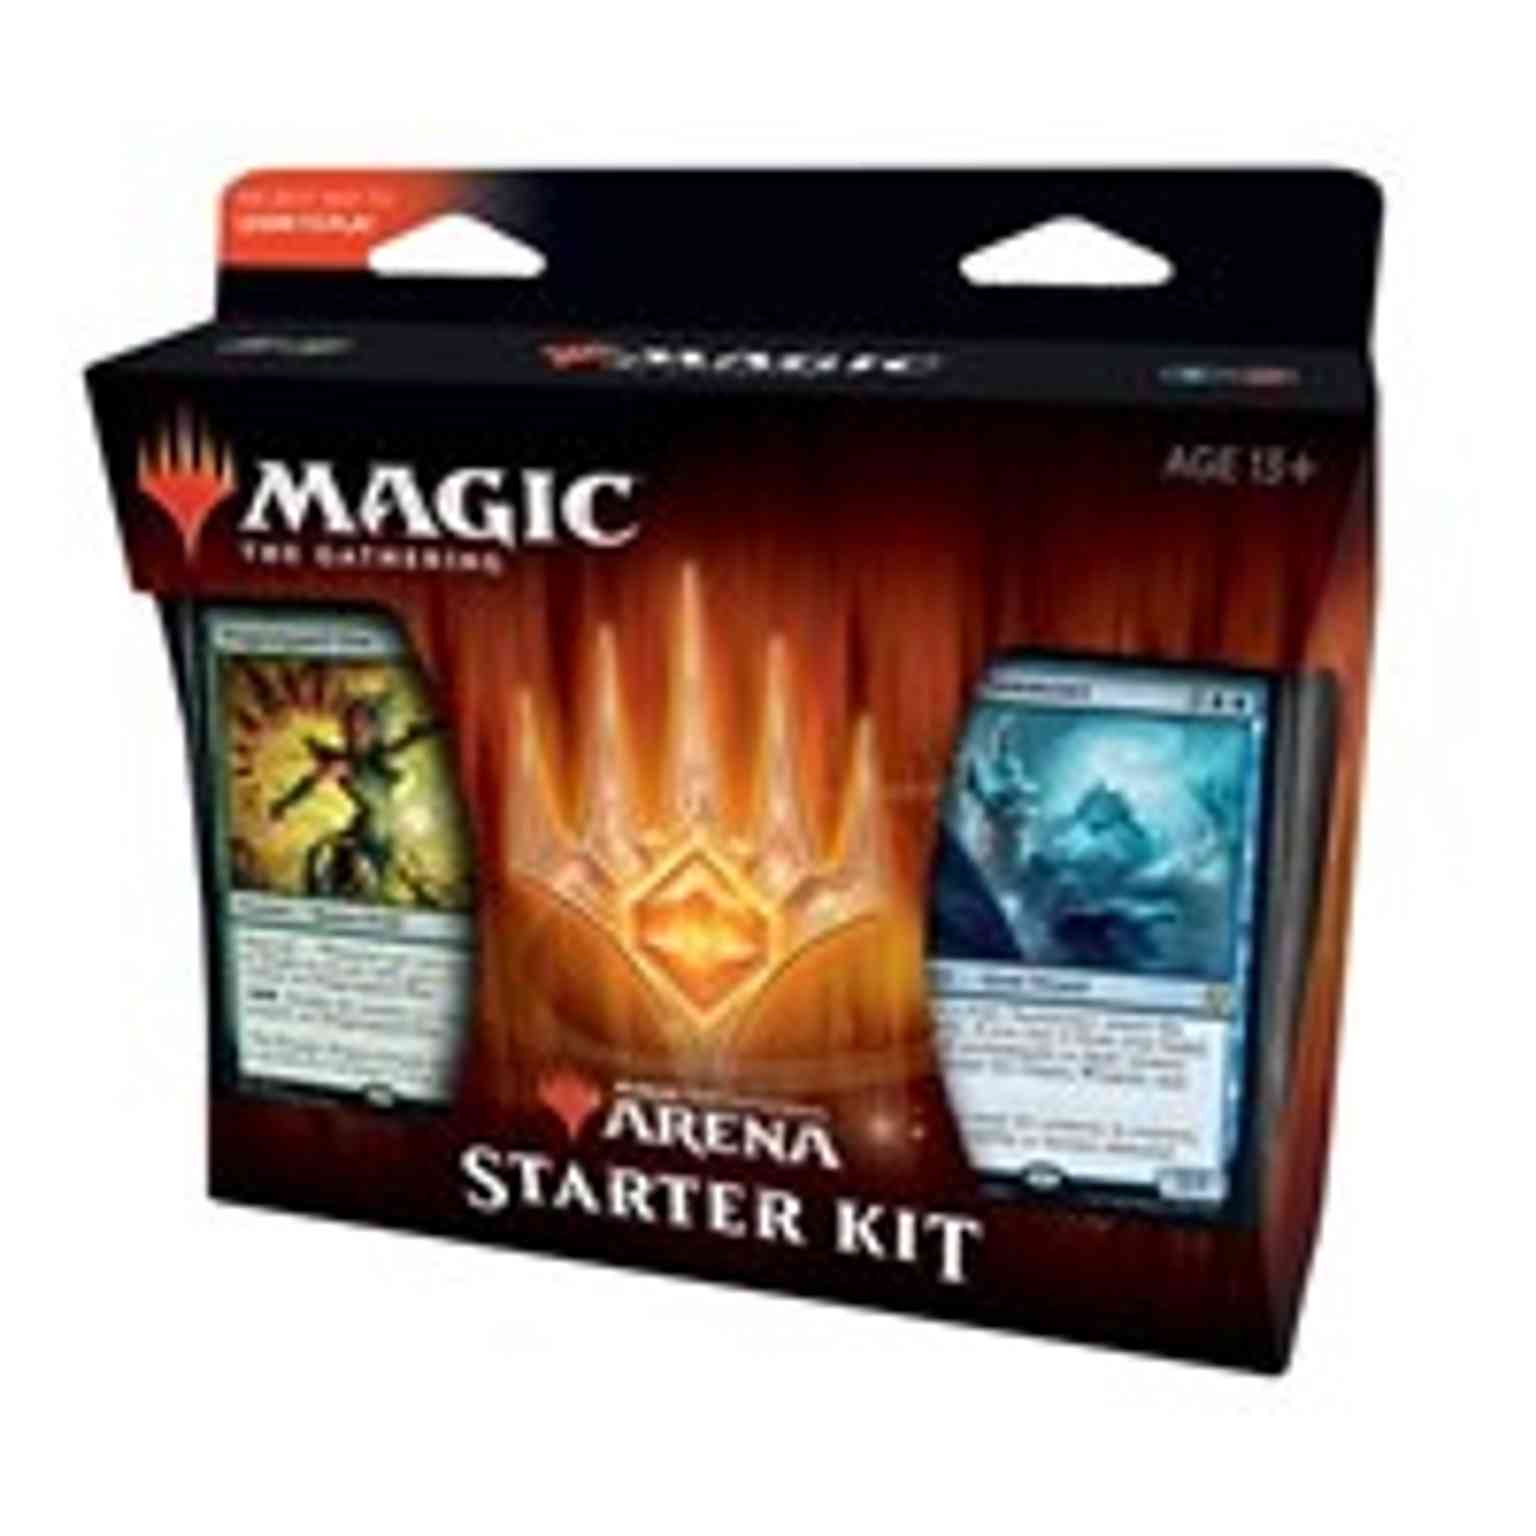 2021 Arena Starter Kit magic card front